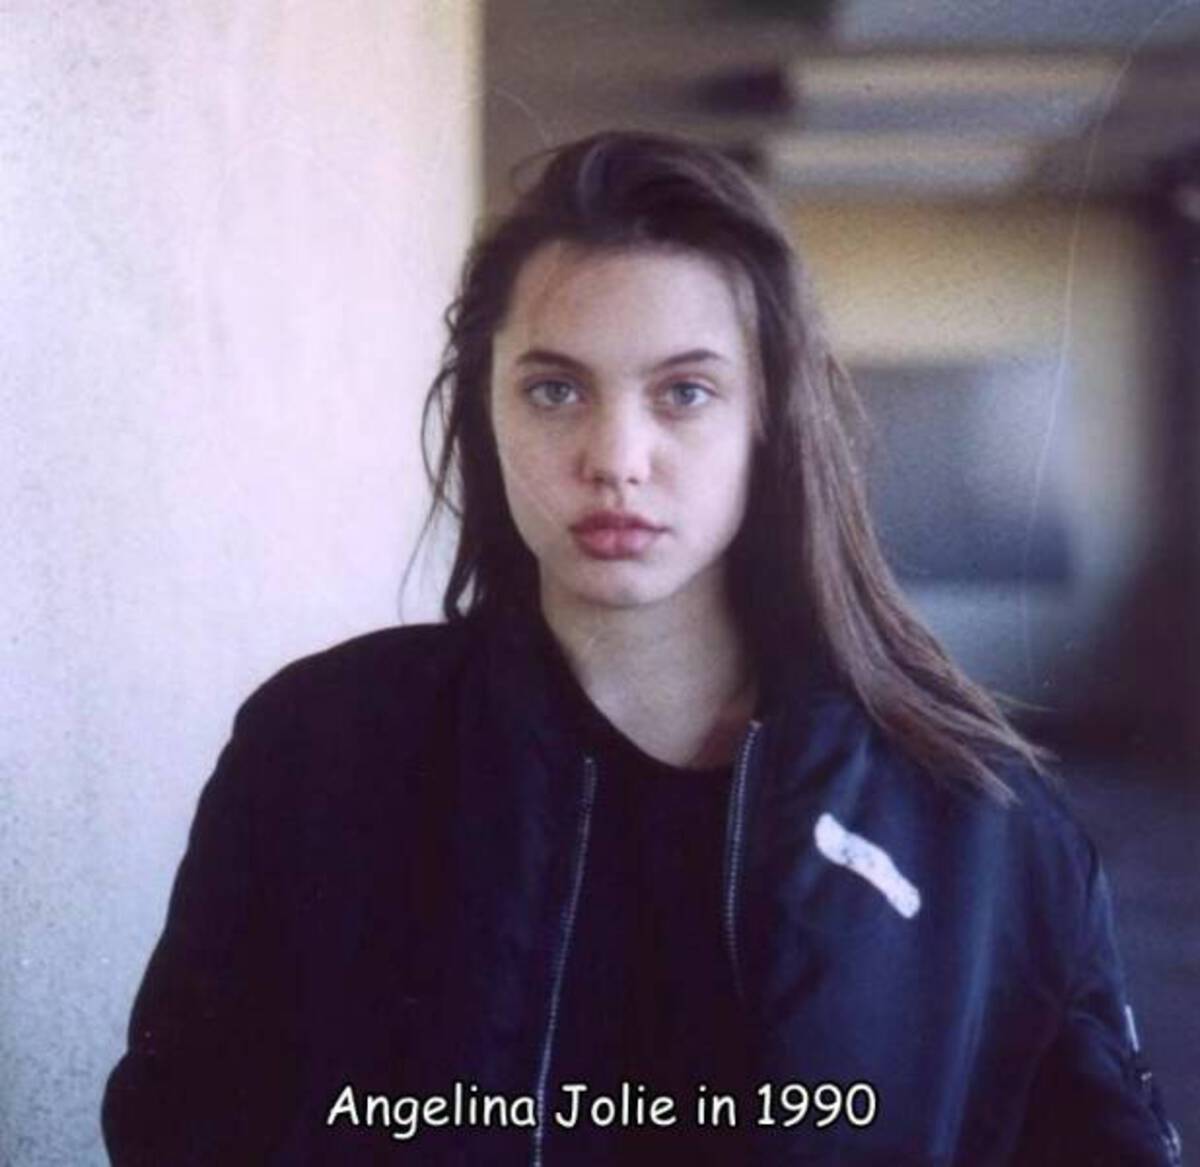 angelina jolie young - Angelina Jolie in 1990